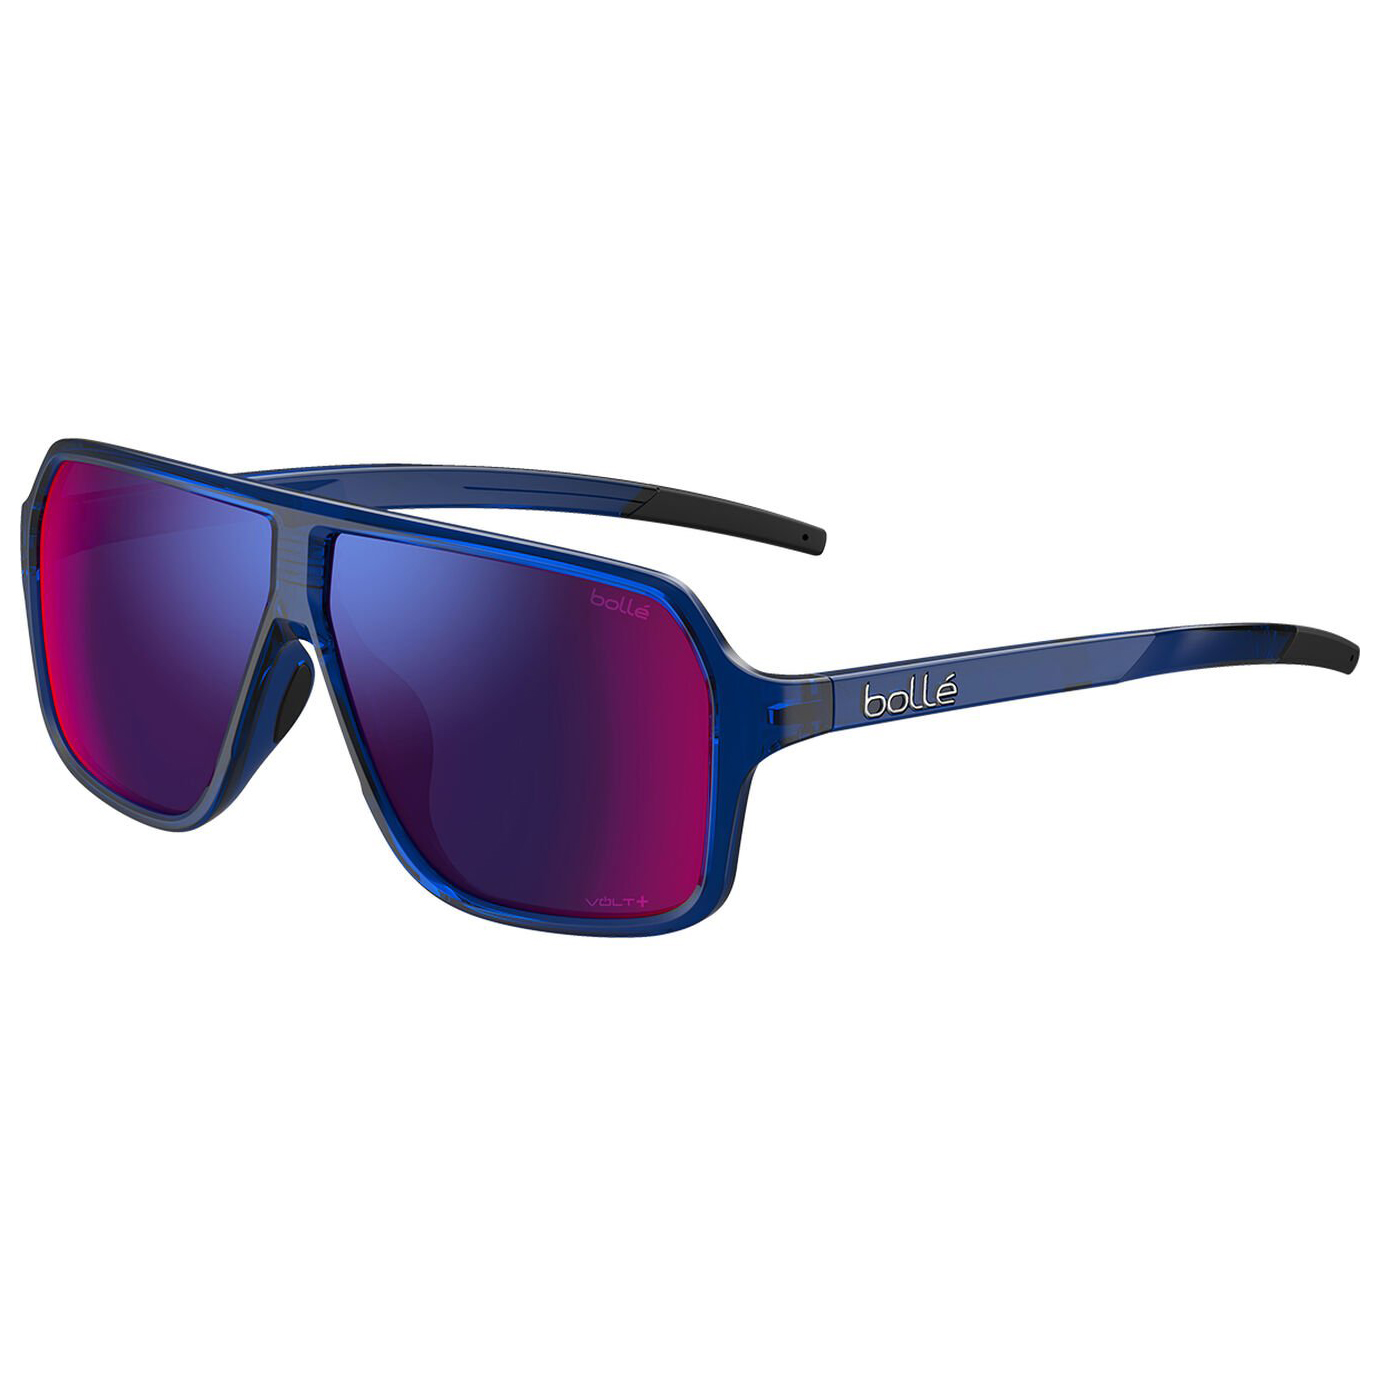 Солнцезащитные очки Bollé Prime Polarized S3 (VLT 16%), цвет Navy Crystal Shiny очки солнцезащитные stylemark polarized l1504a